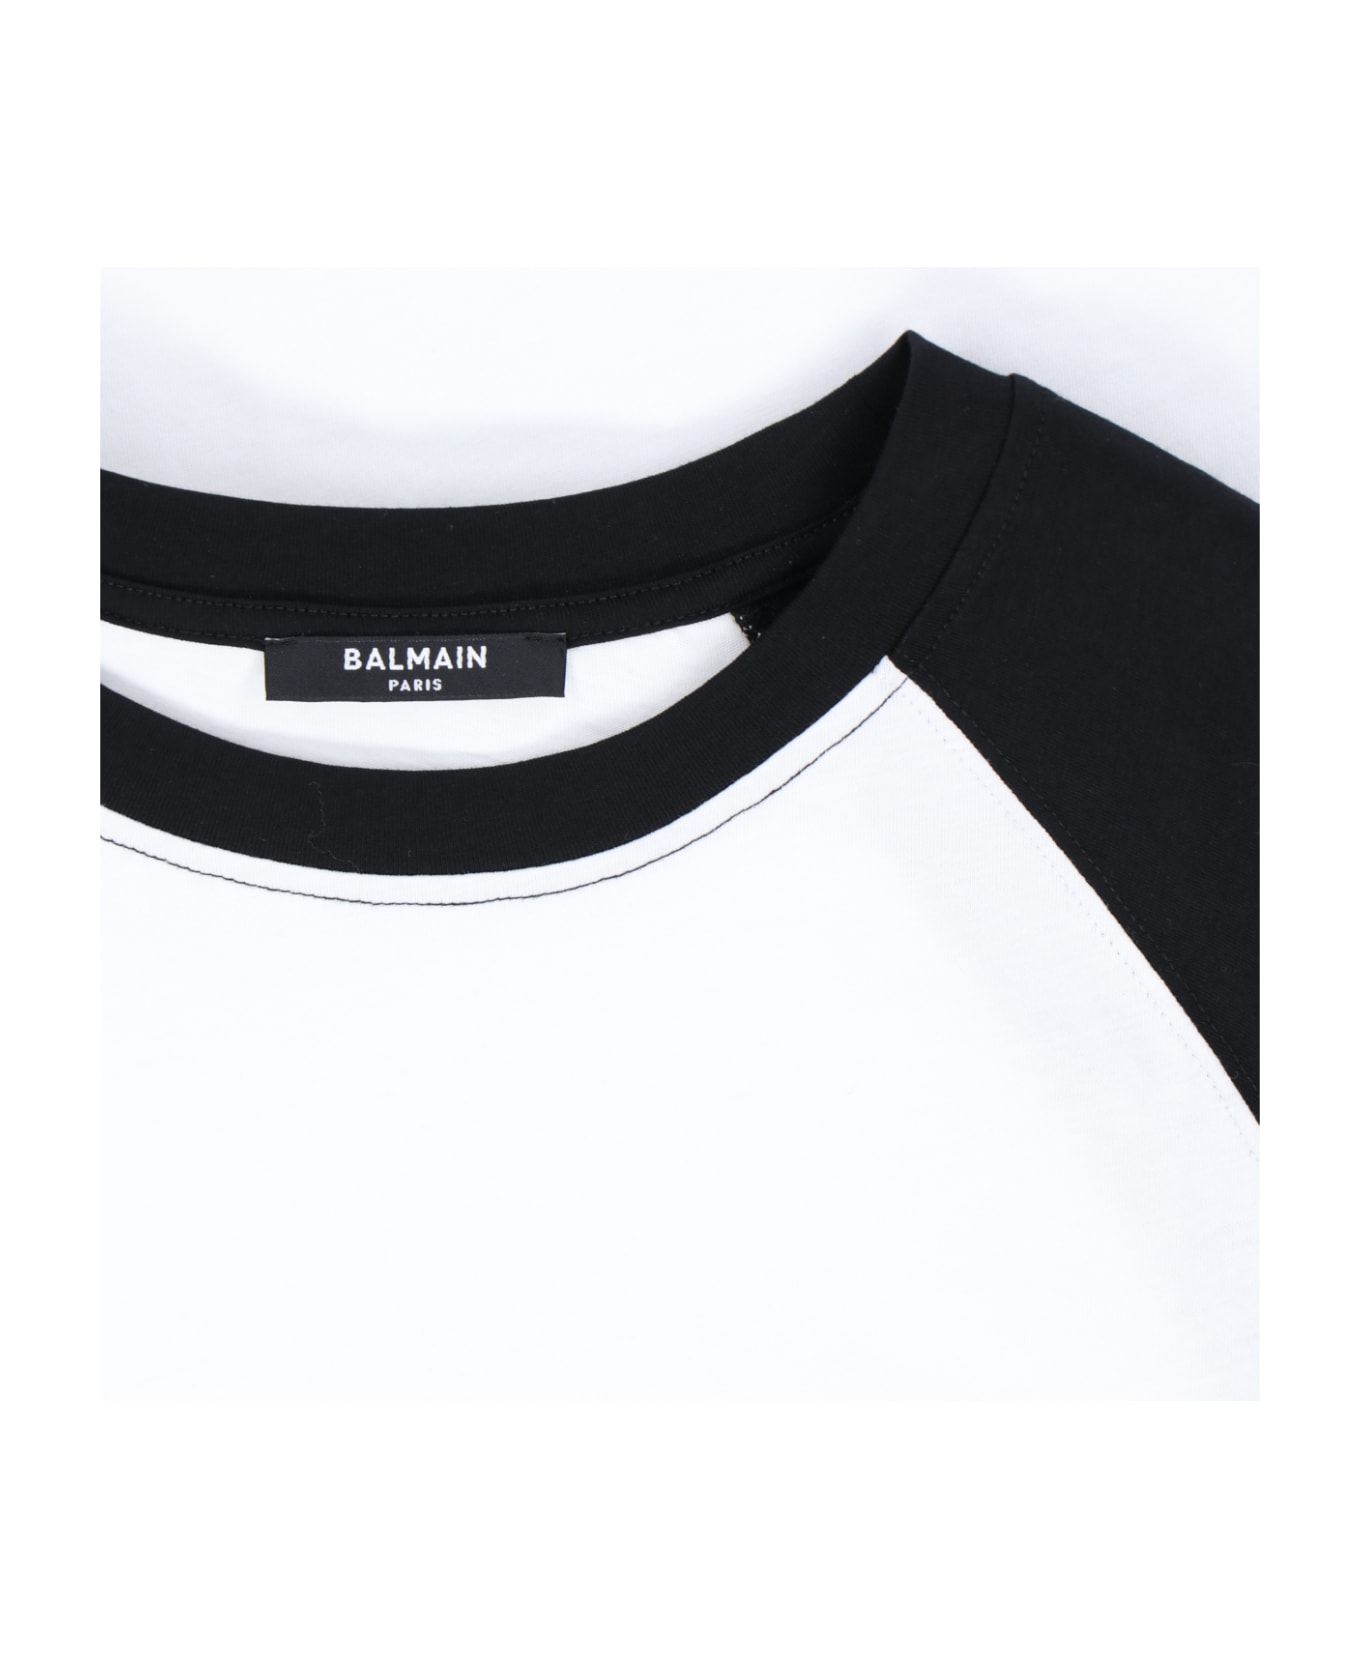 Balmain Logo Crop T-shirt - White